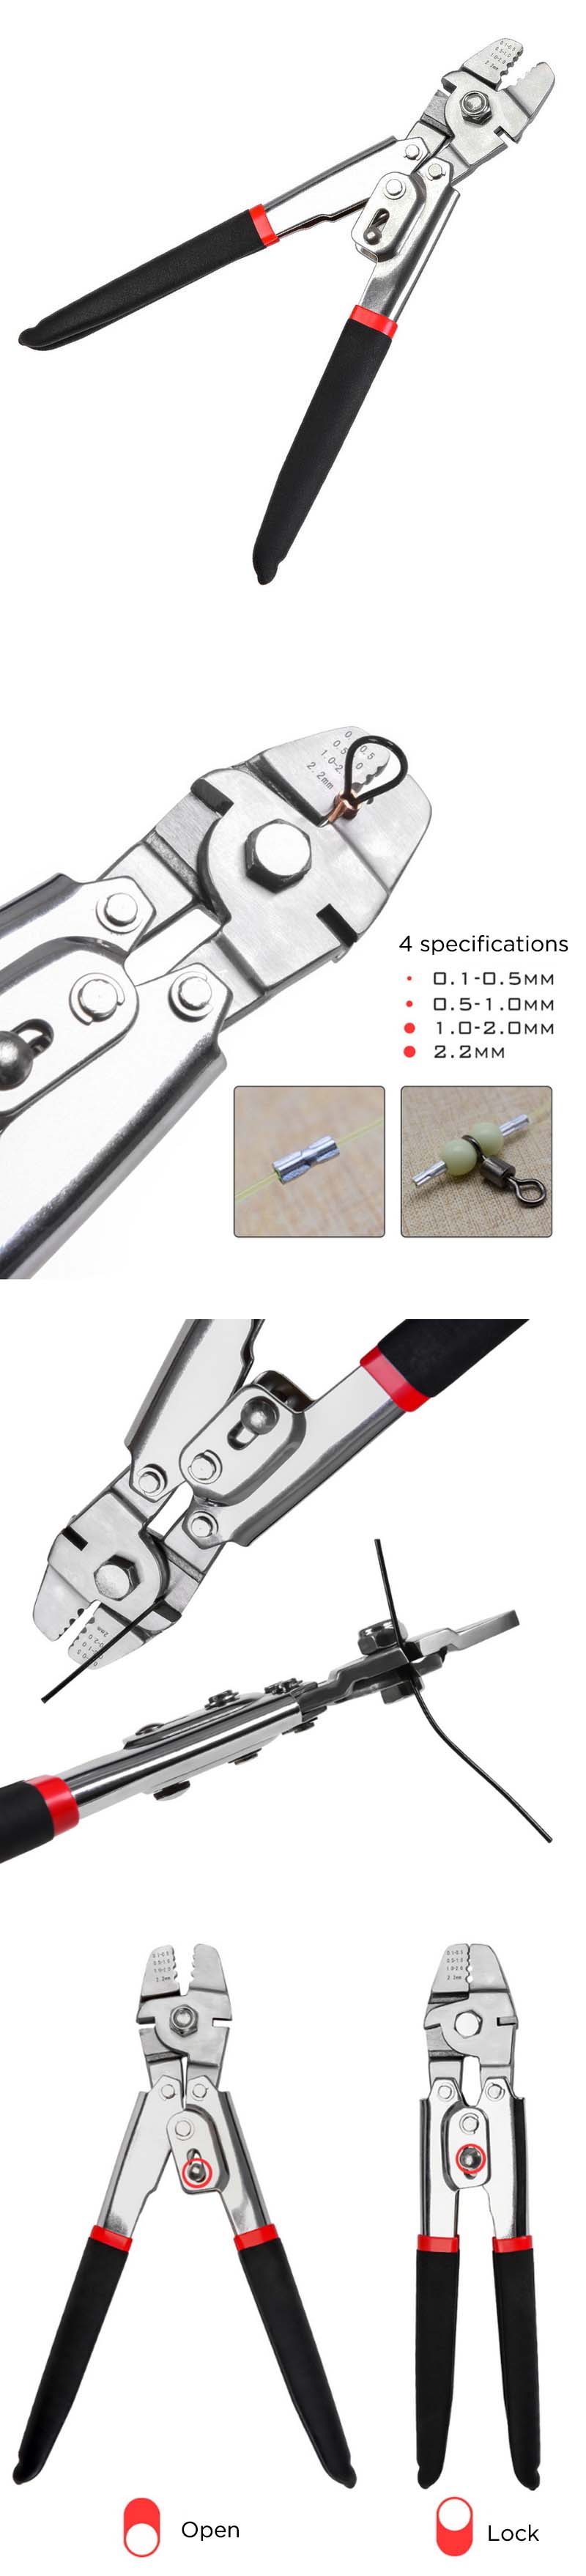 LEO-26cm-Fishing-Pliers-Multifunction-Stainless-Steel-Fishing-Tool-1585179-1